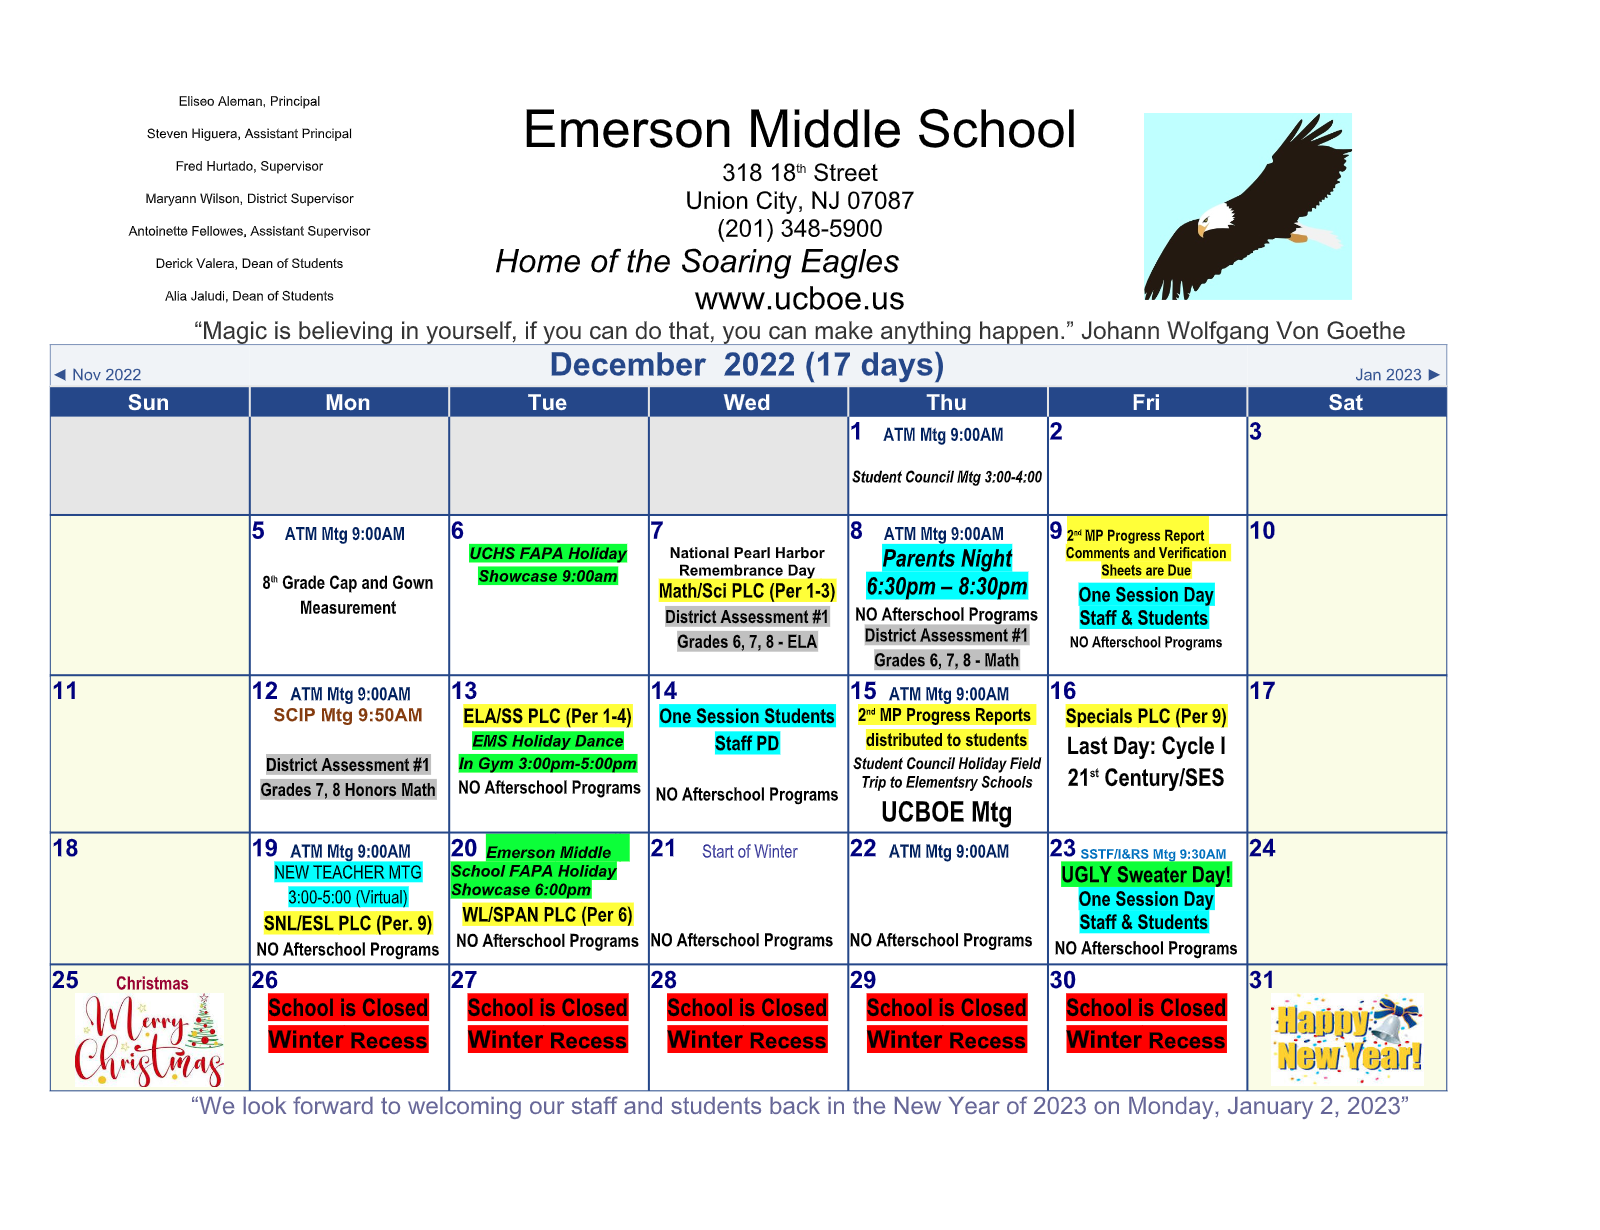 Emerson Middle School December 2022 Calendar